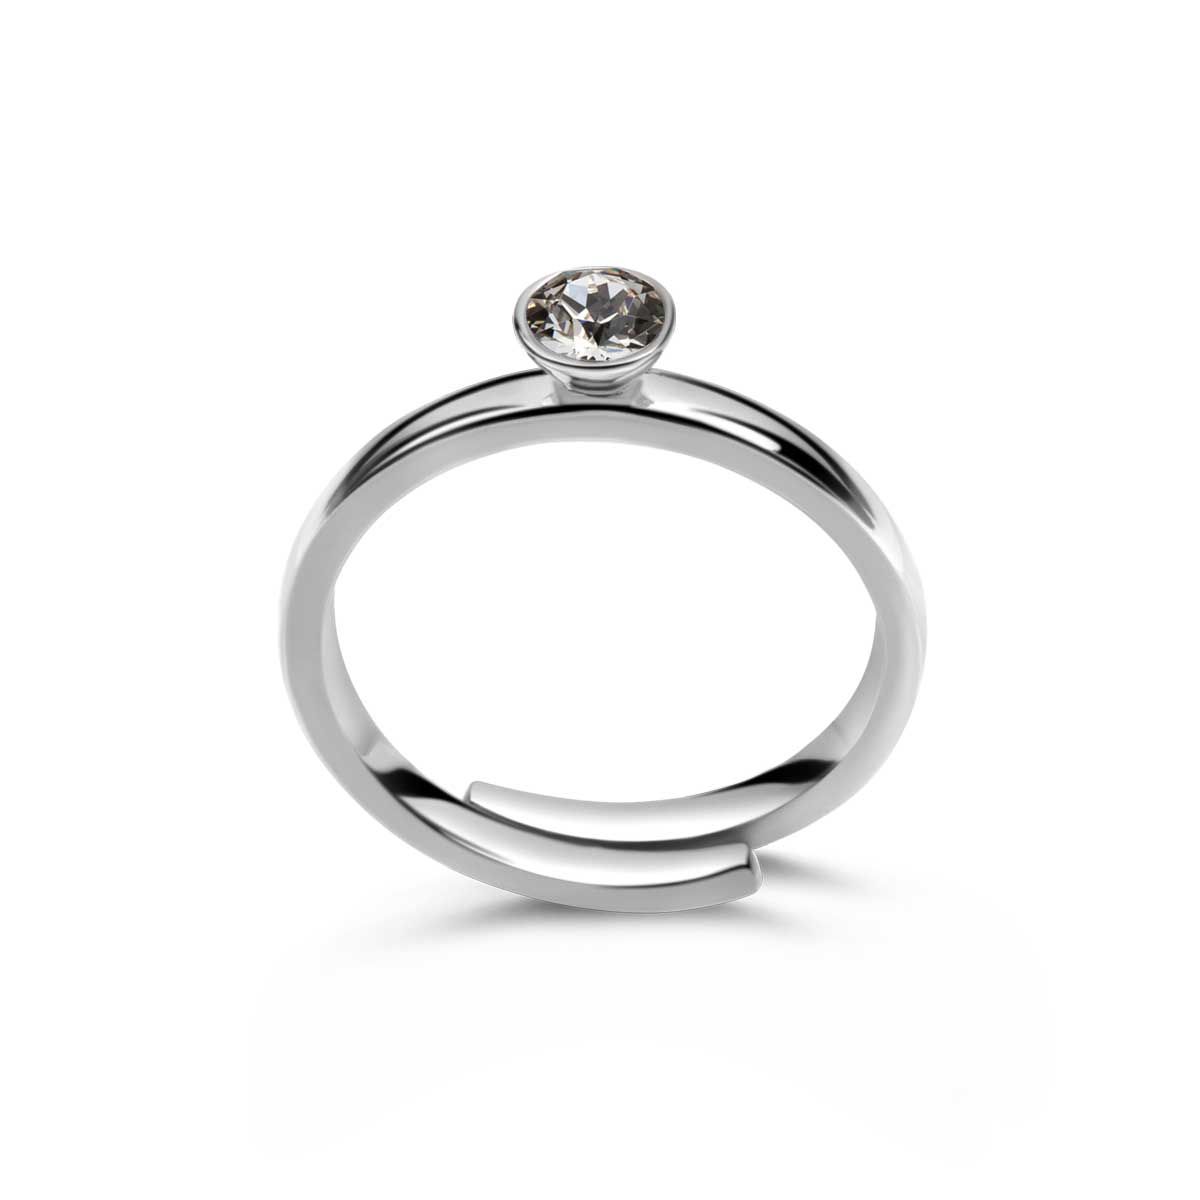 Ring 925 Silber Kristall Zirkonia verstellbar#oberflache_silber